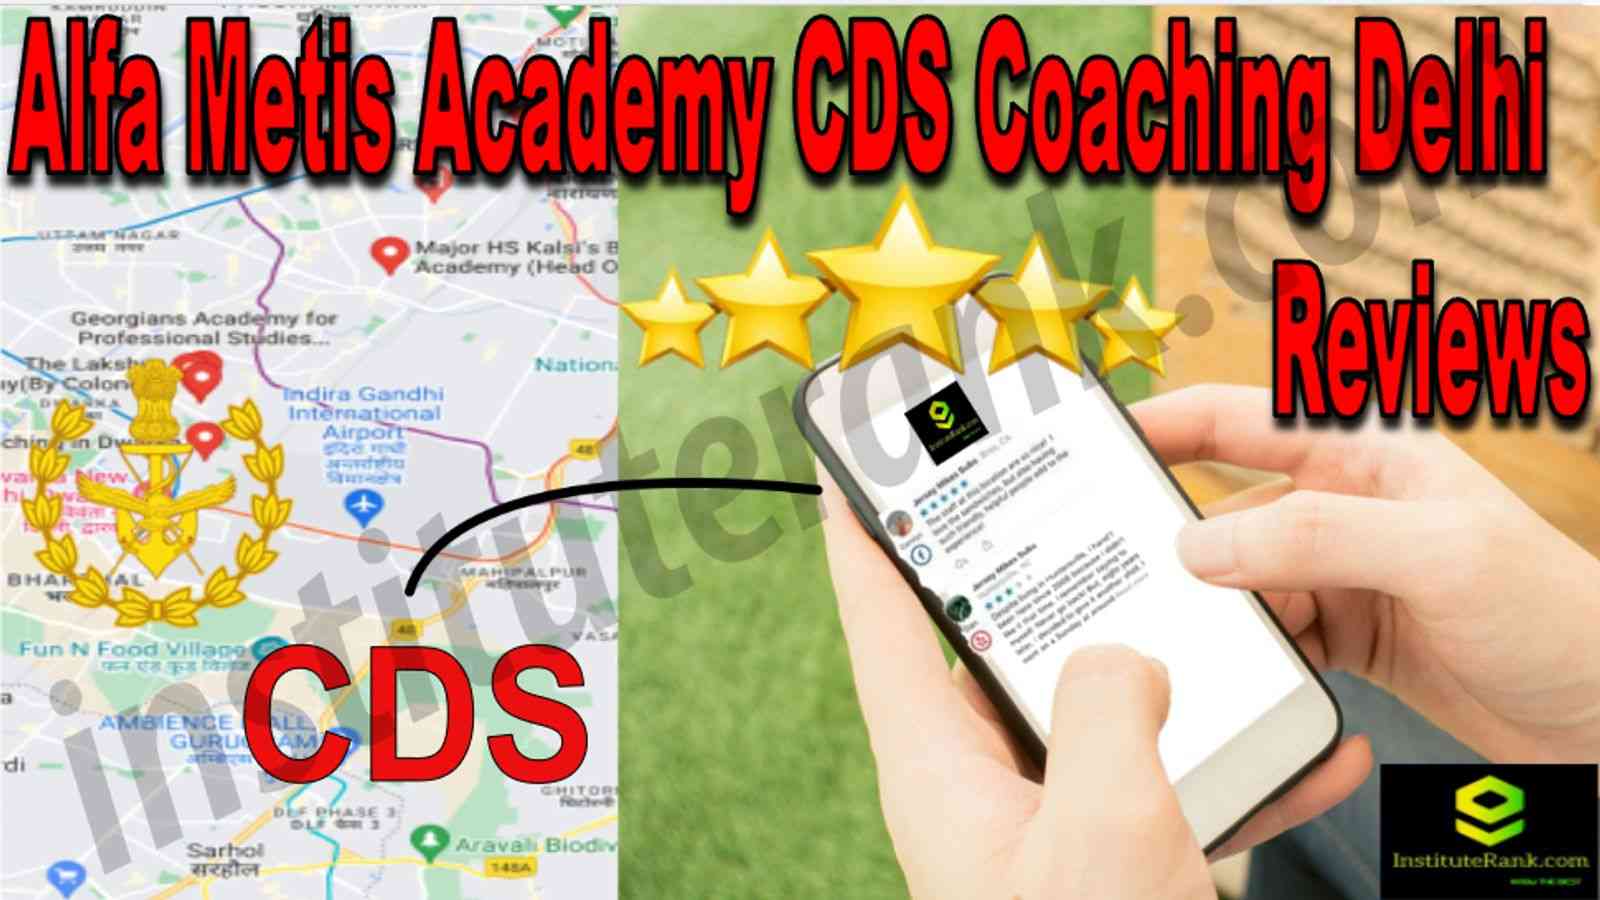 Alfa Metis Academy CDS Coaching Delhi Reviews